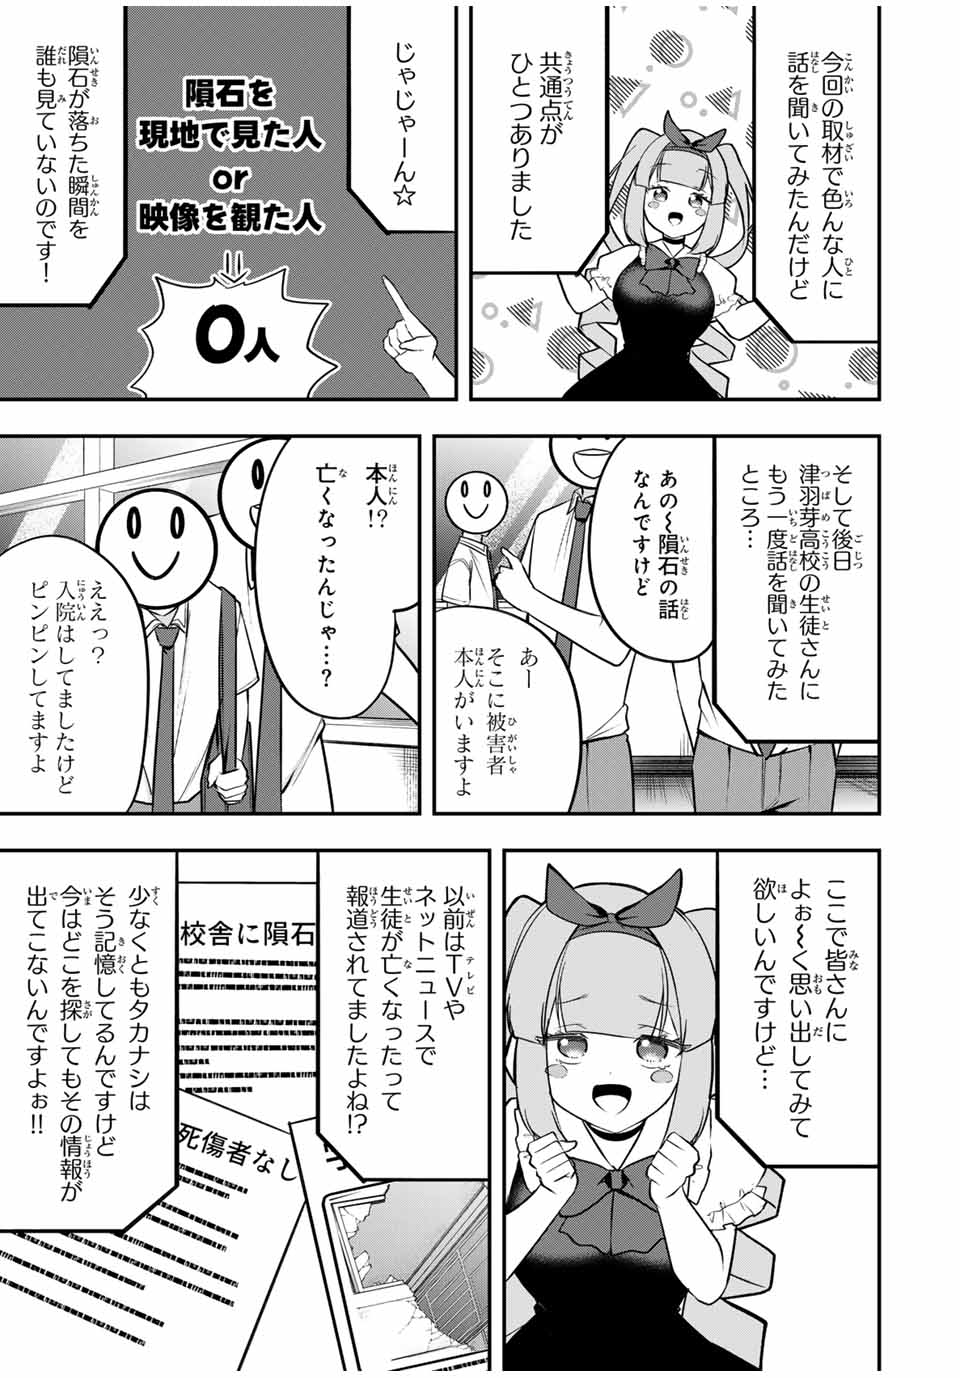 Heroine wa xx Okasegitai - Chapter 13 - Page 3